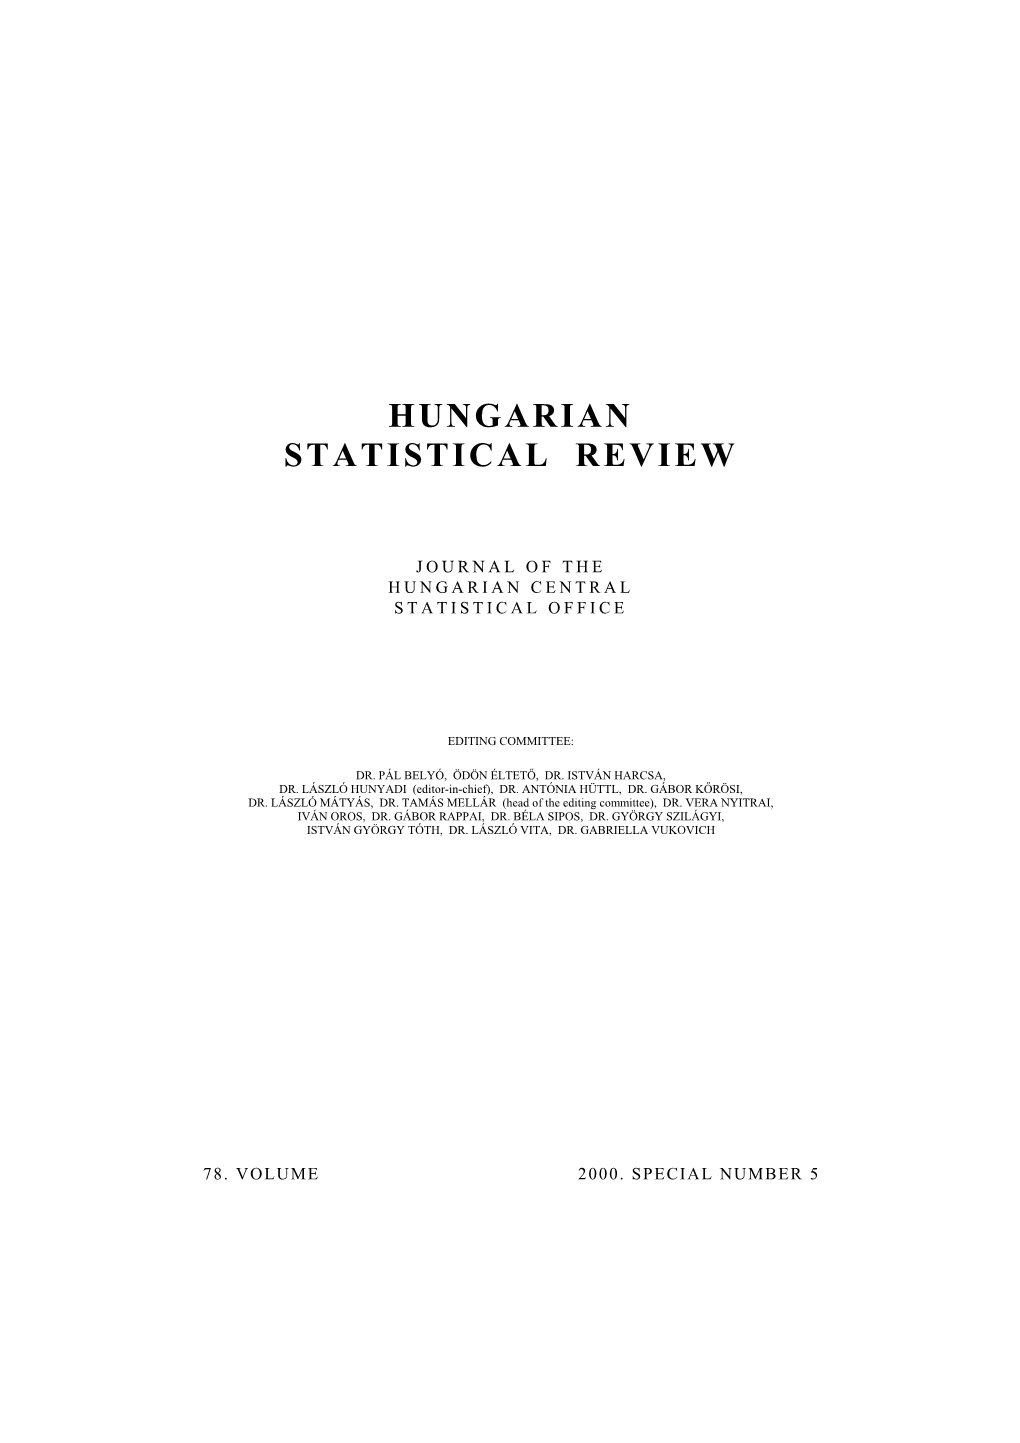 Hungarian Statistical Review